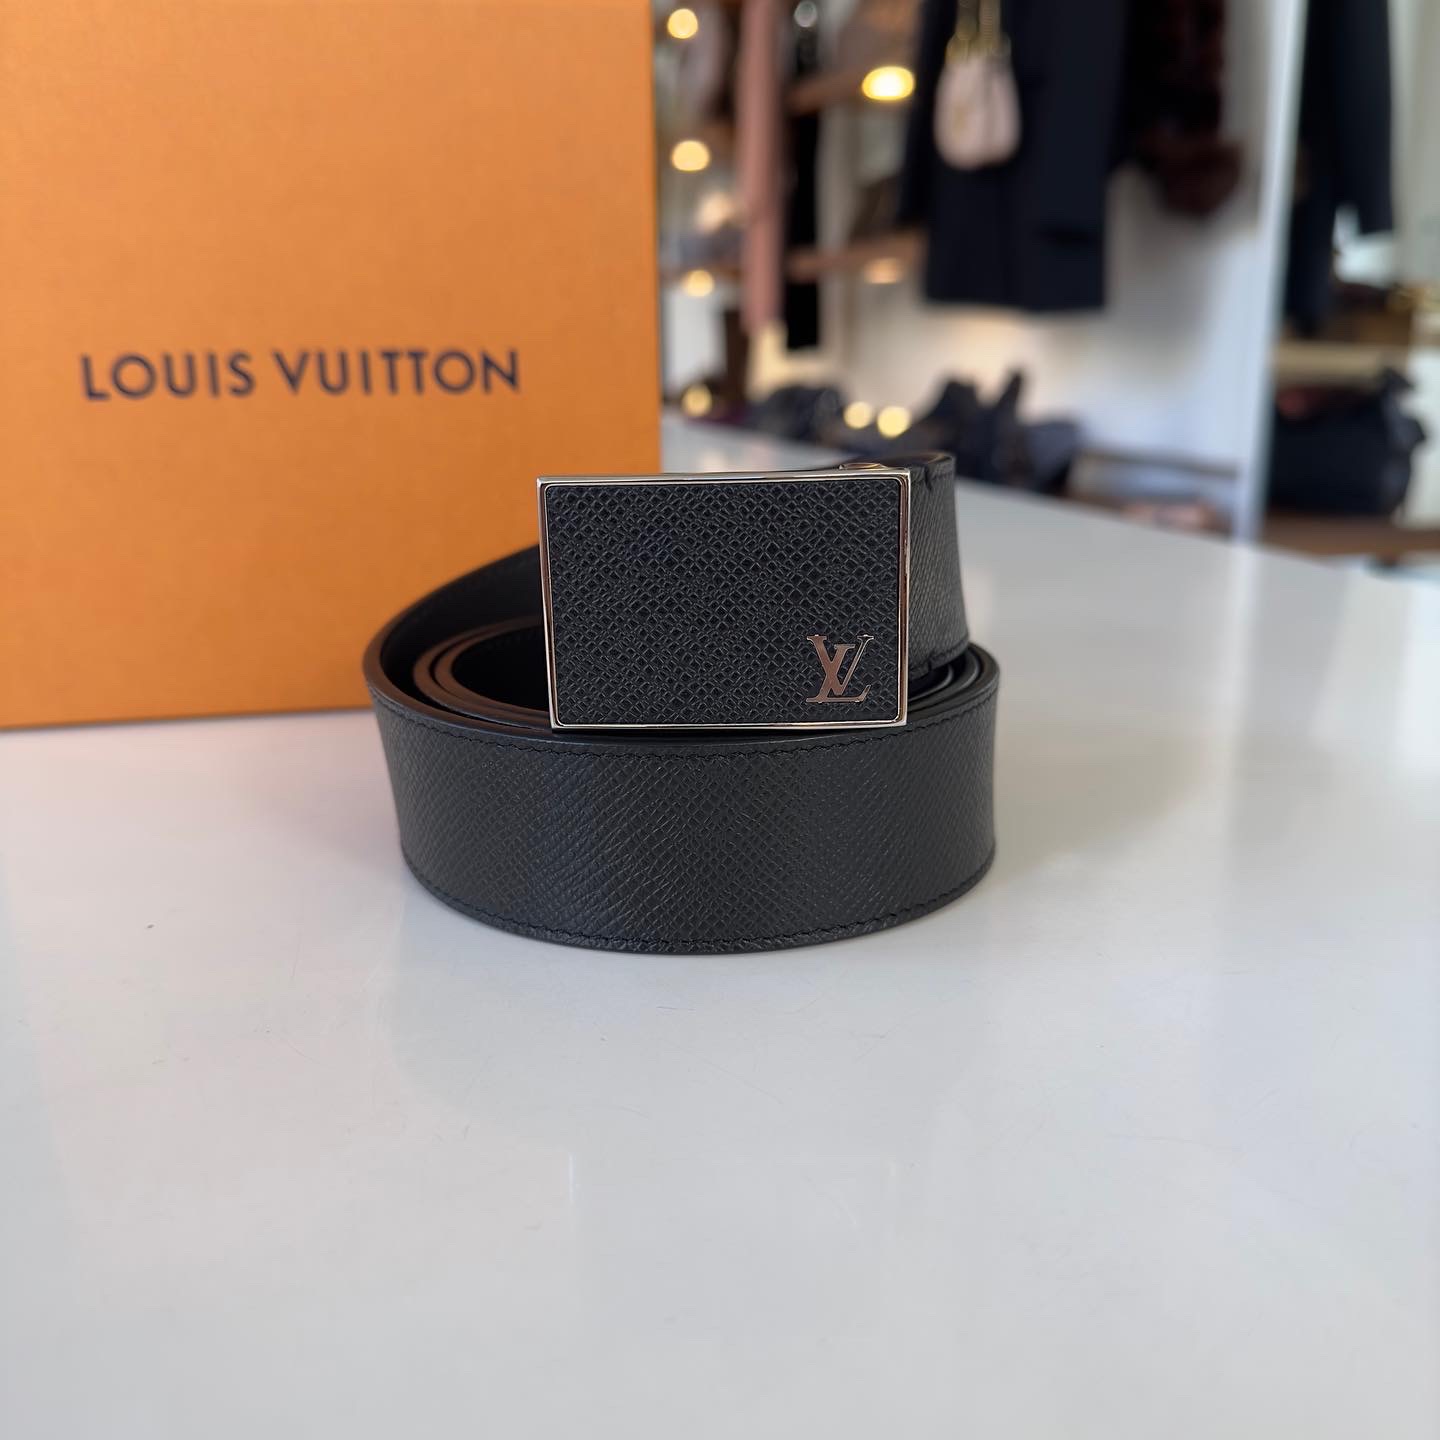 Saldi Cinture Louis Vuitton da Uomo: 13+ Prodotti